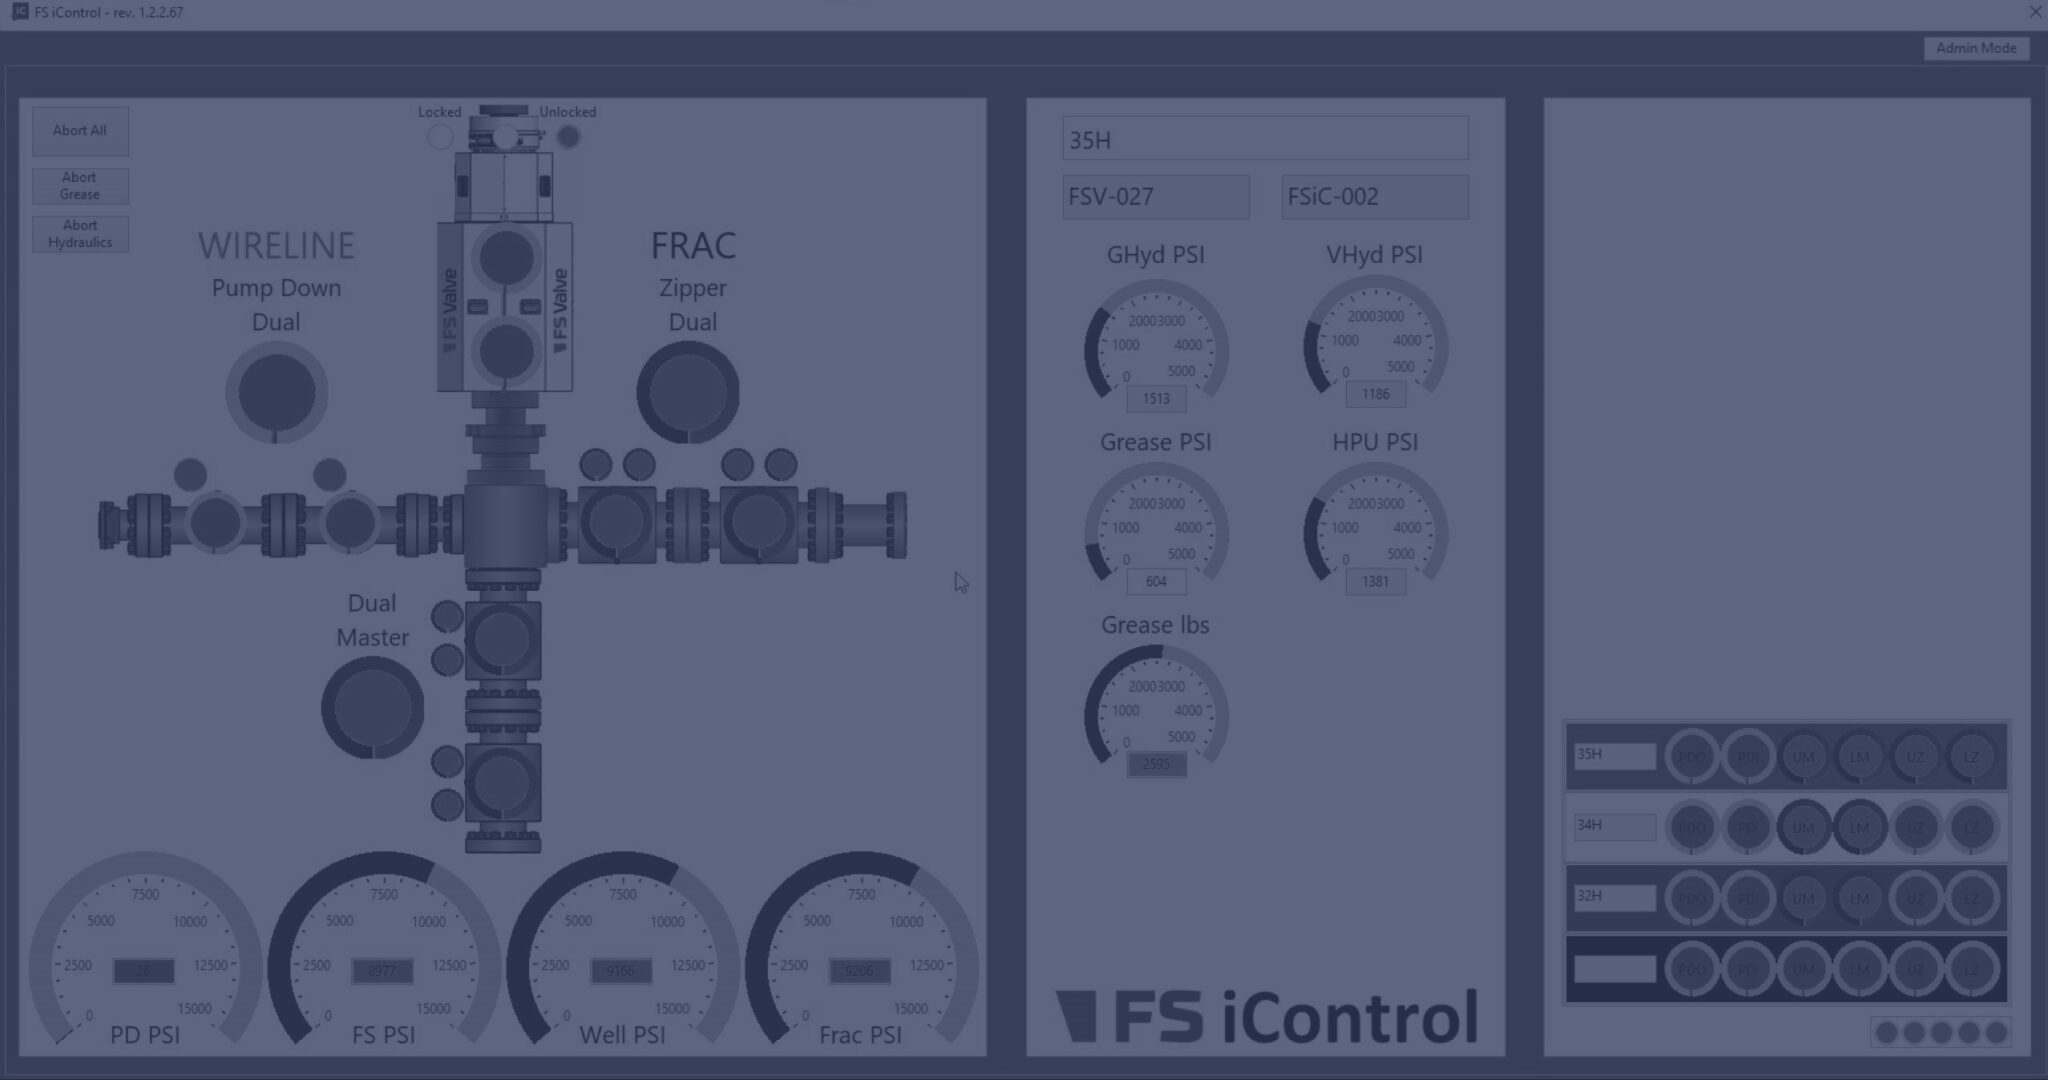 Freedom Series iControl dashboard